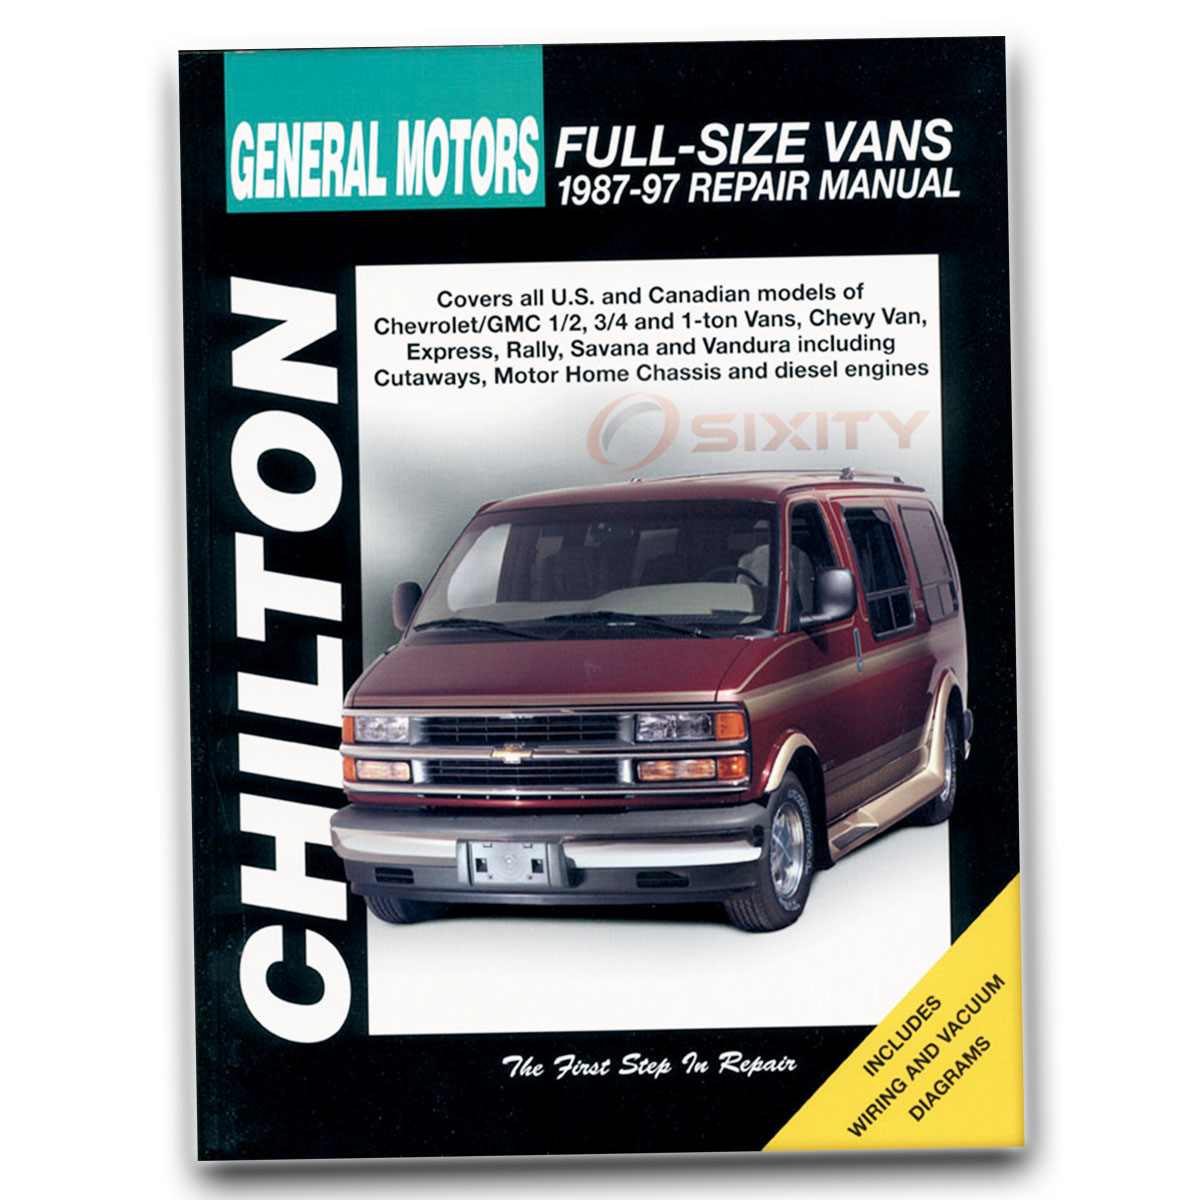 Chevy express van service manual